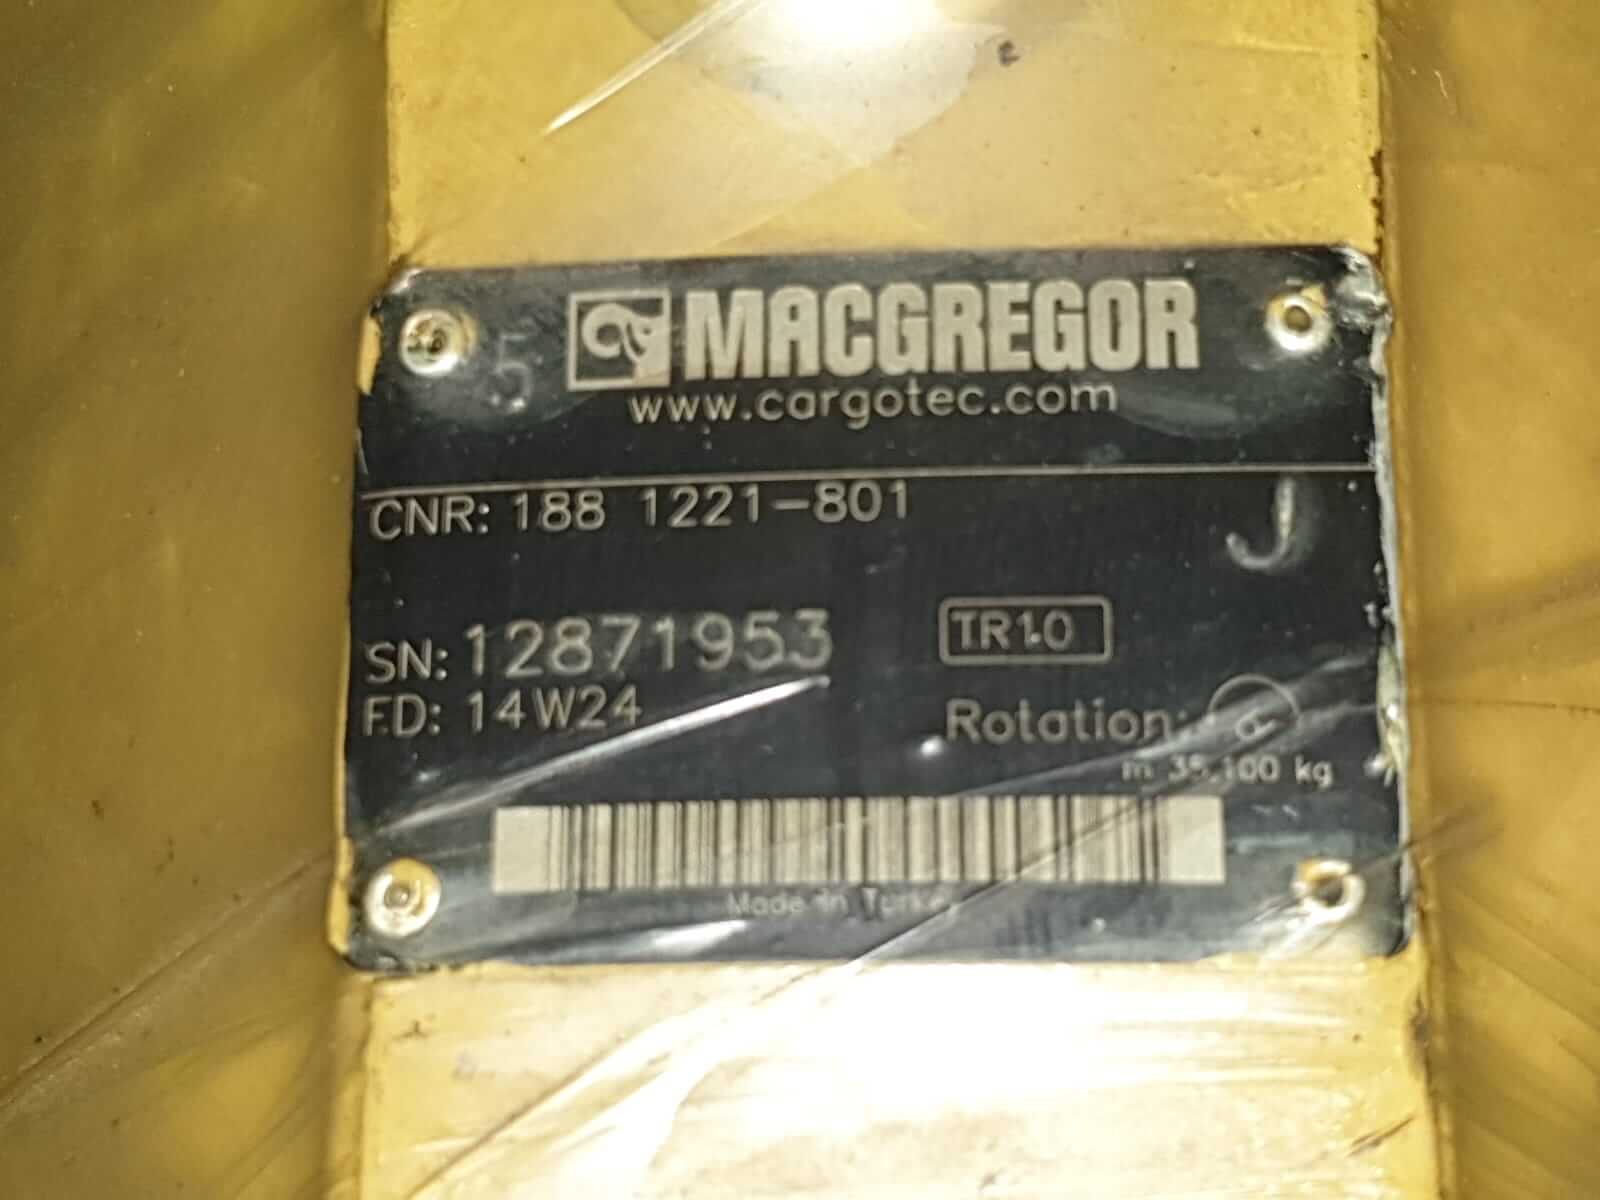 Macgregor deck crane oil motor Part No.188 1221-801 HAGGLUNDS SE-89185